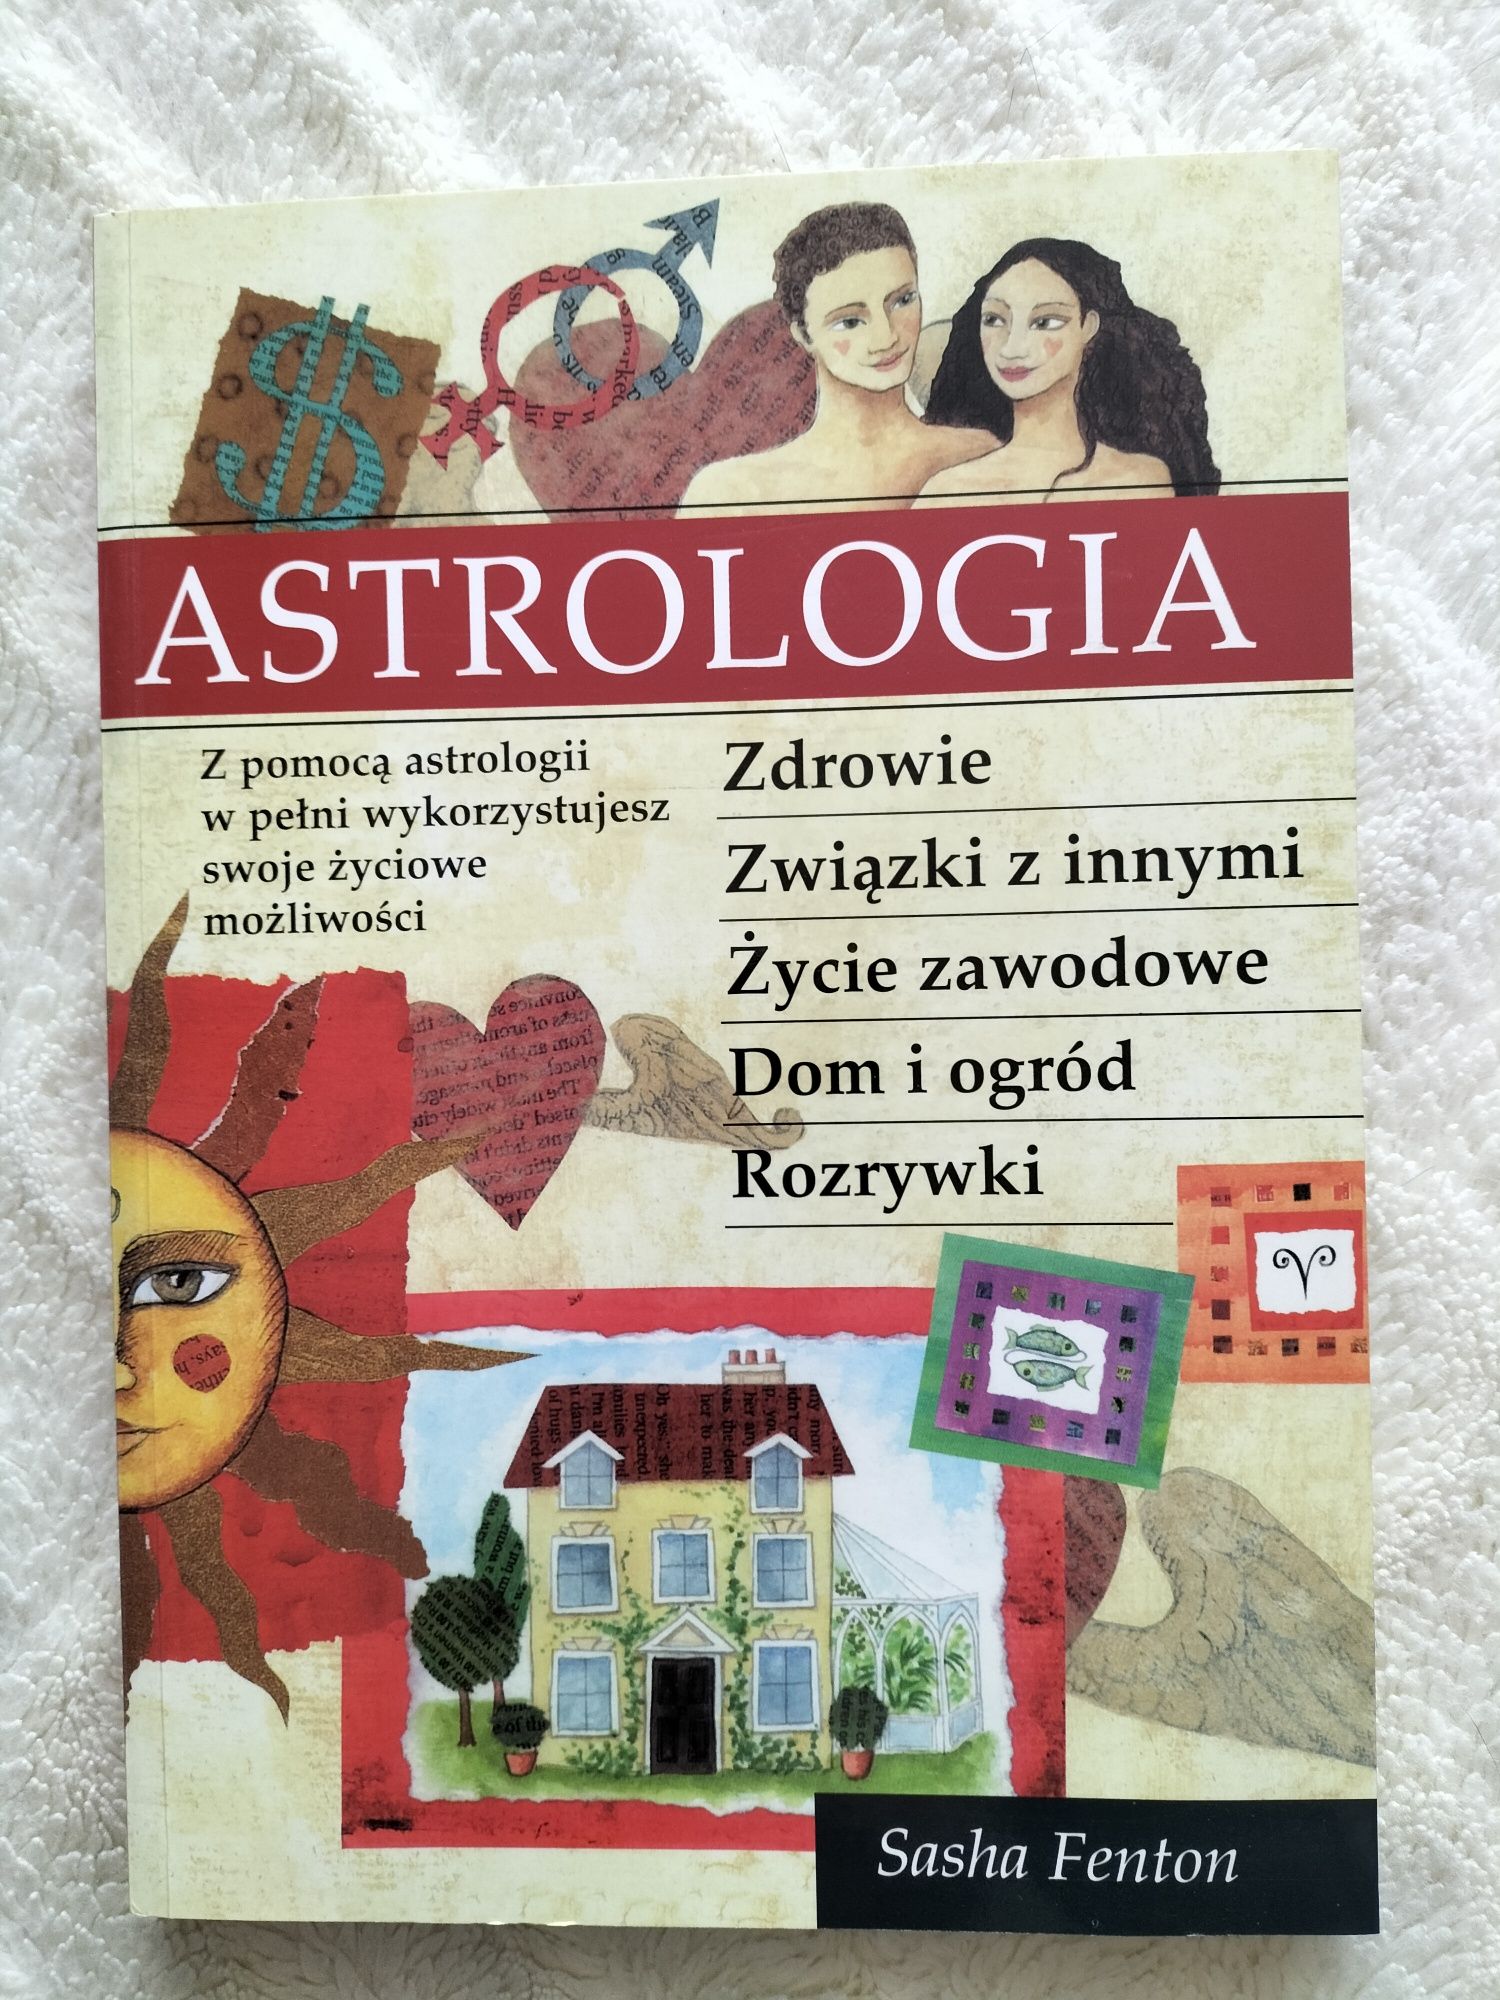 Książka ,, Astrologia"